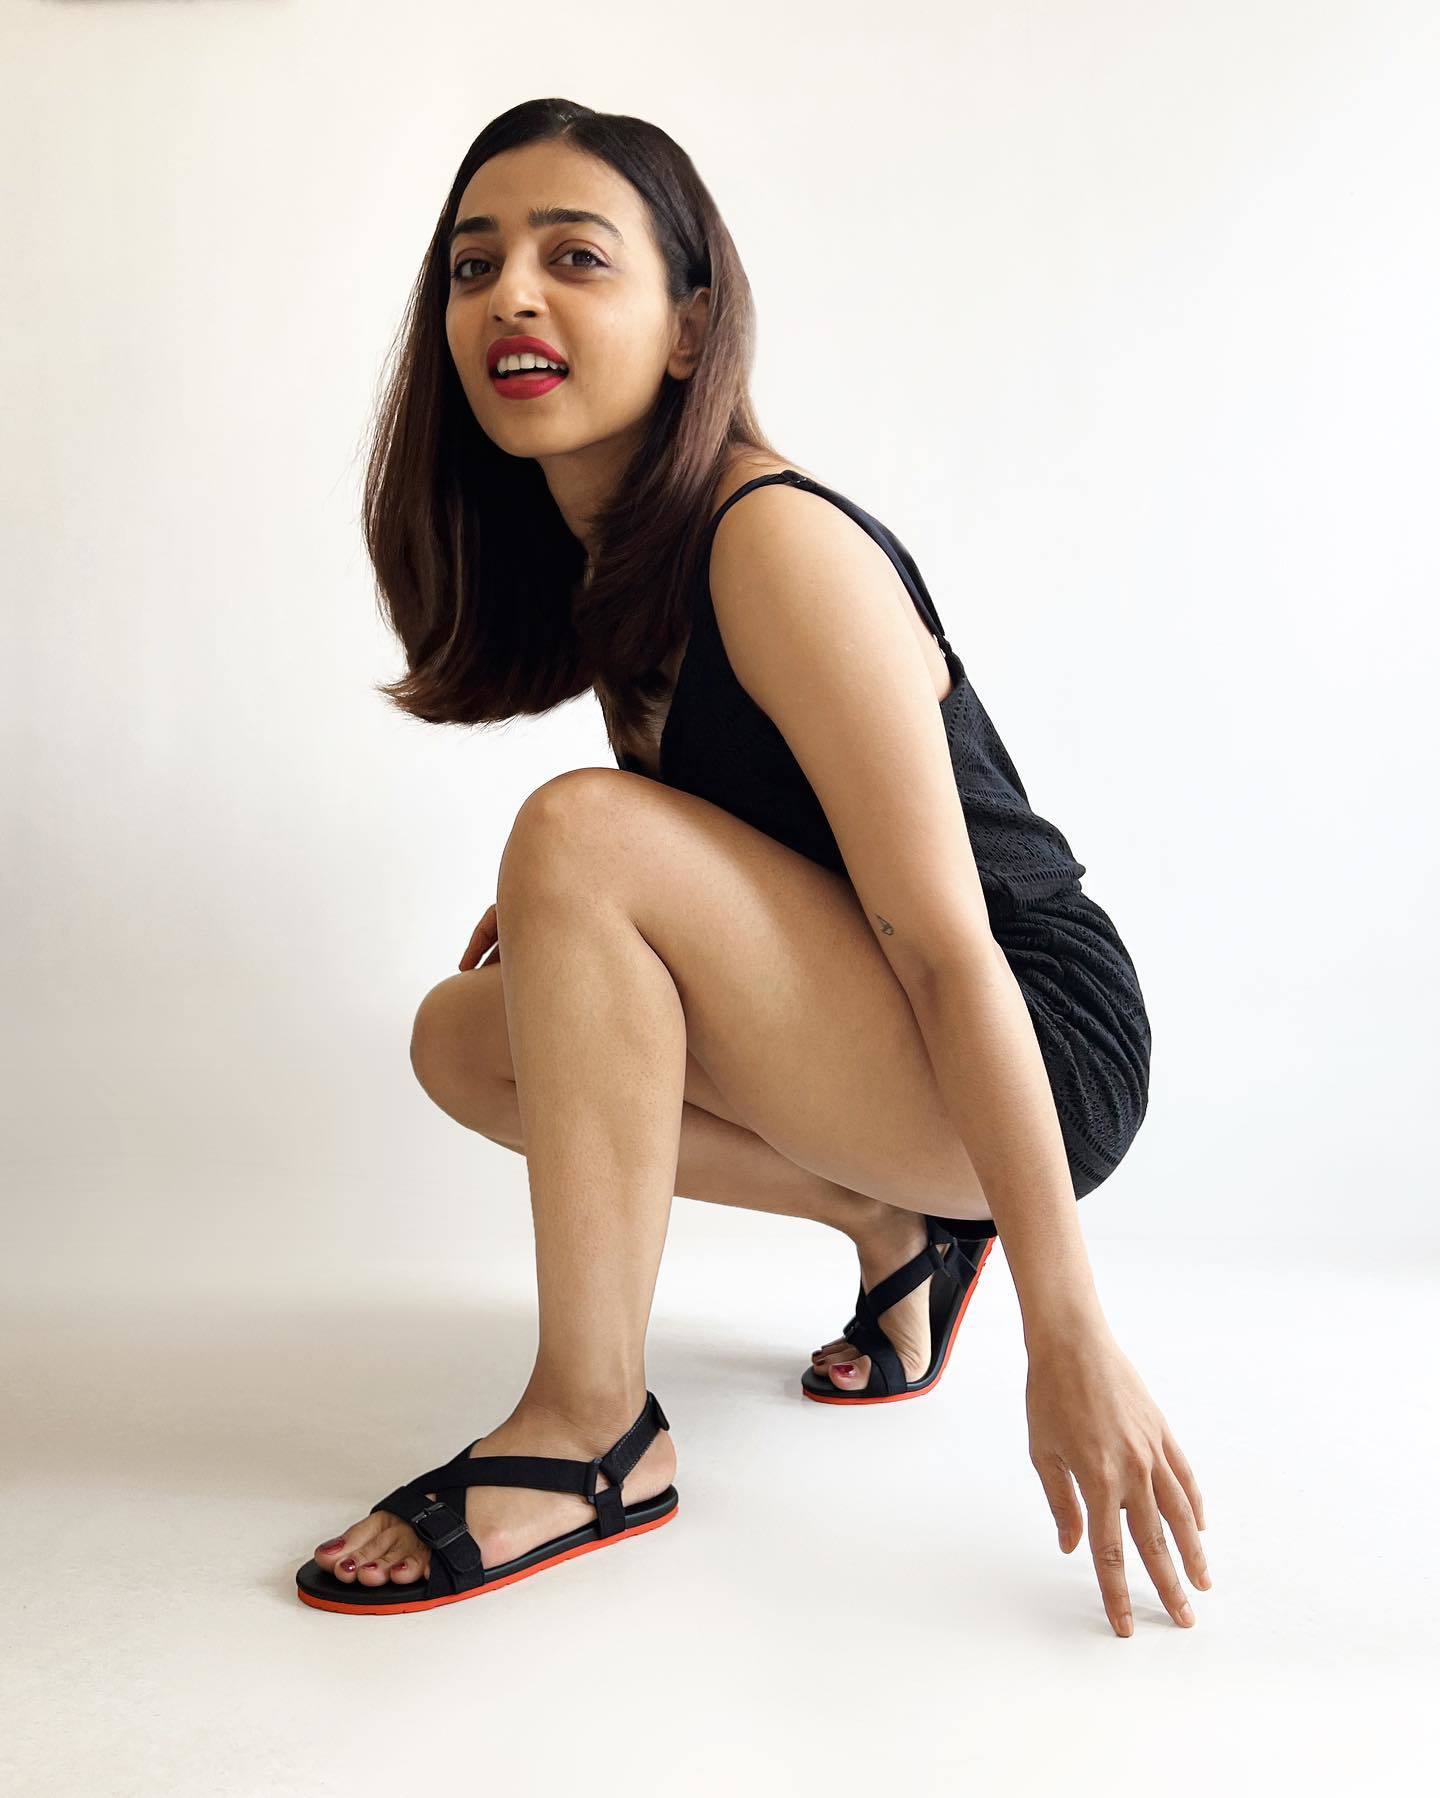 Radhika Ki Sex Video - Radhika Apte's Feet << wikiFeet